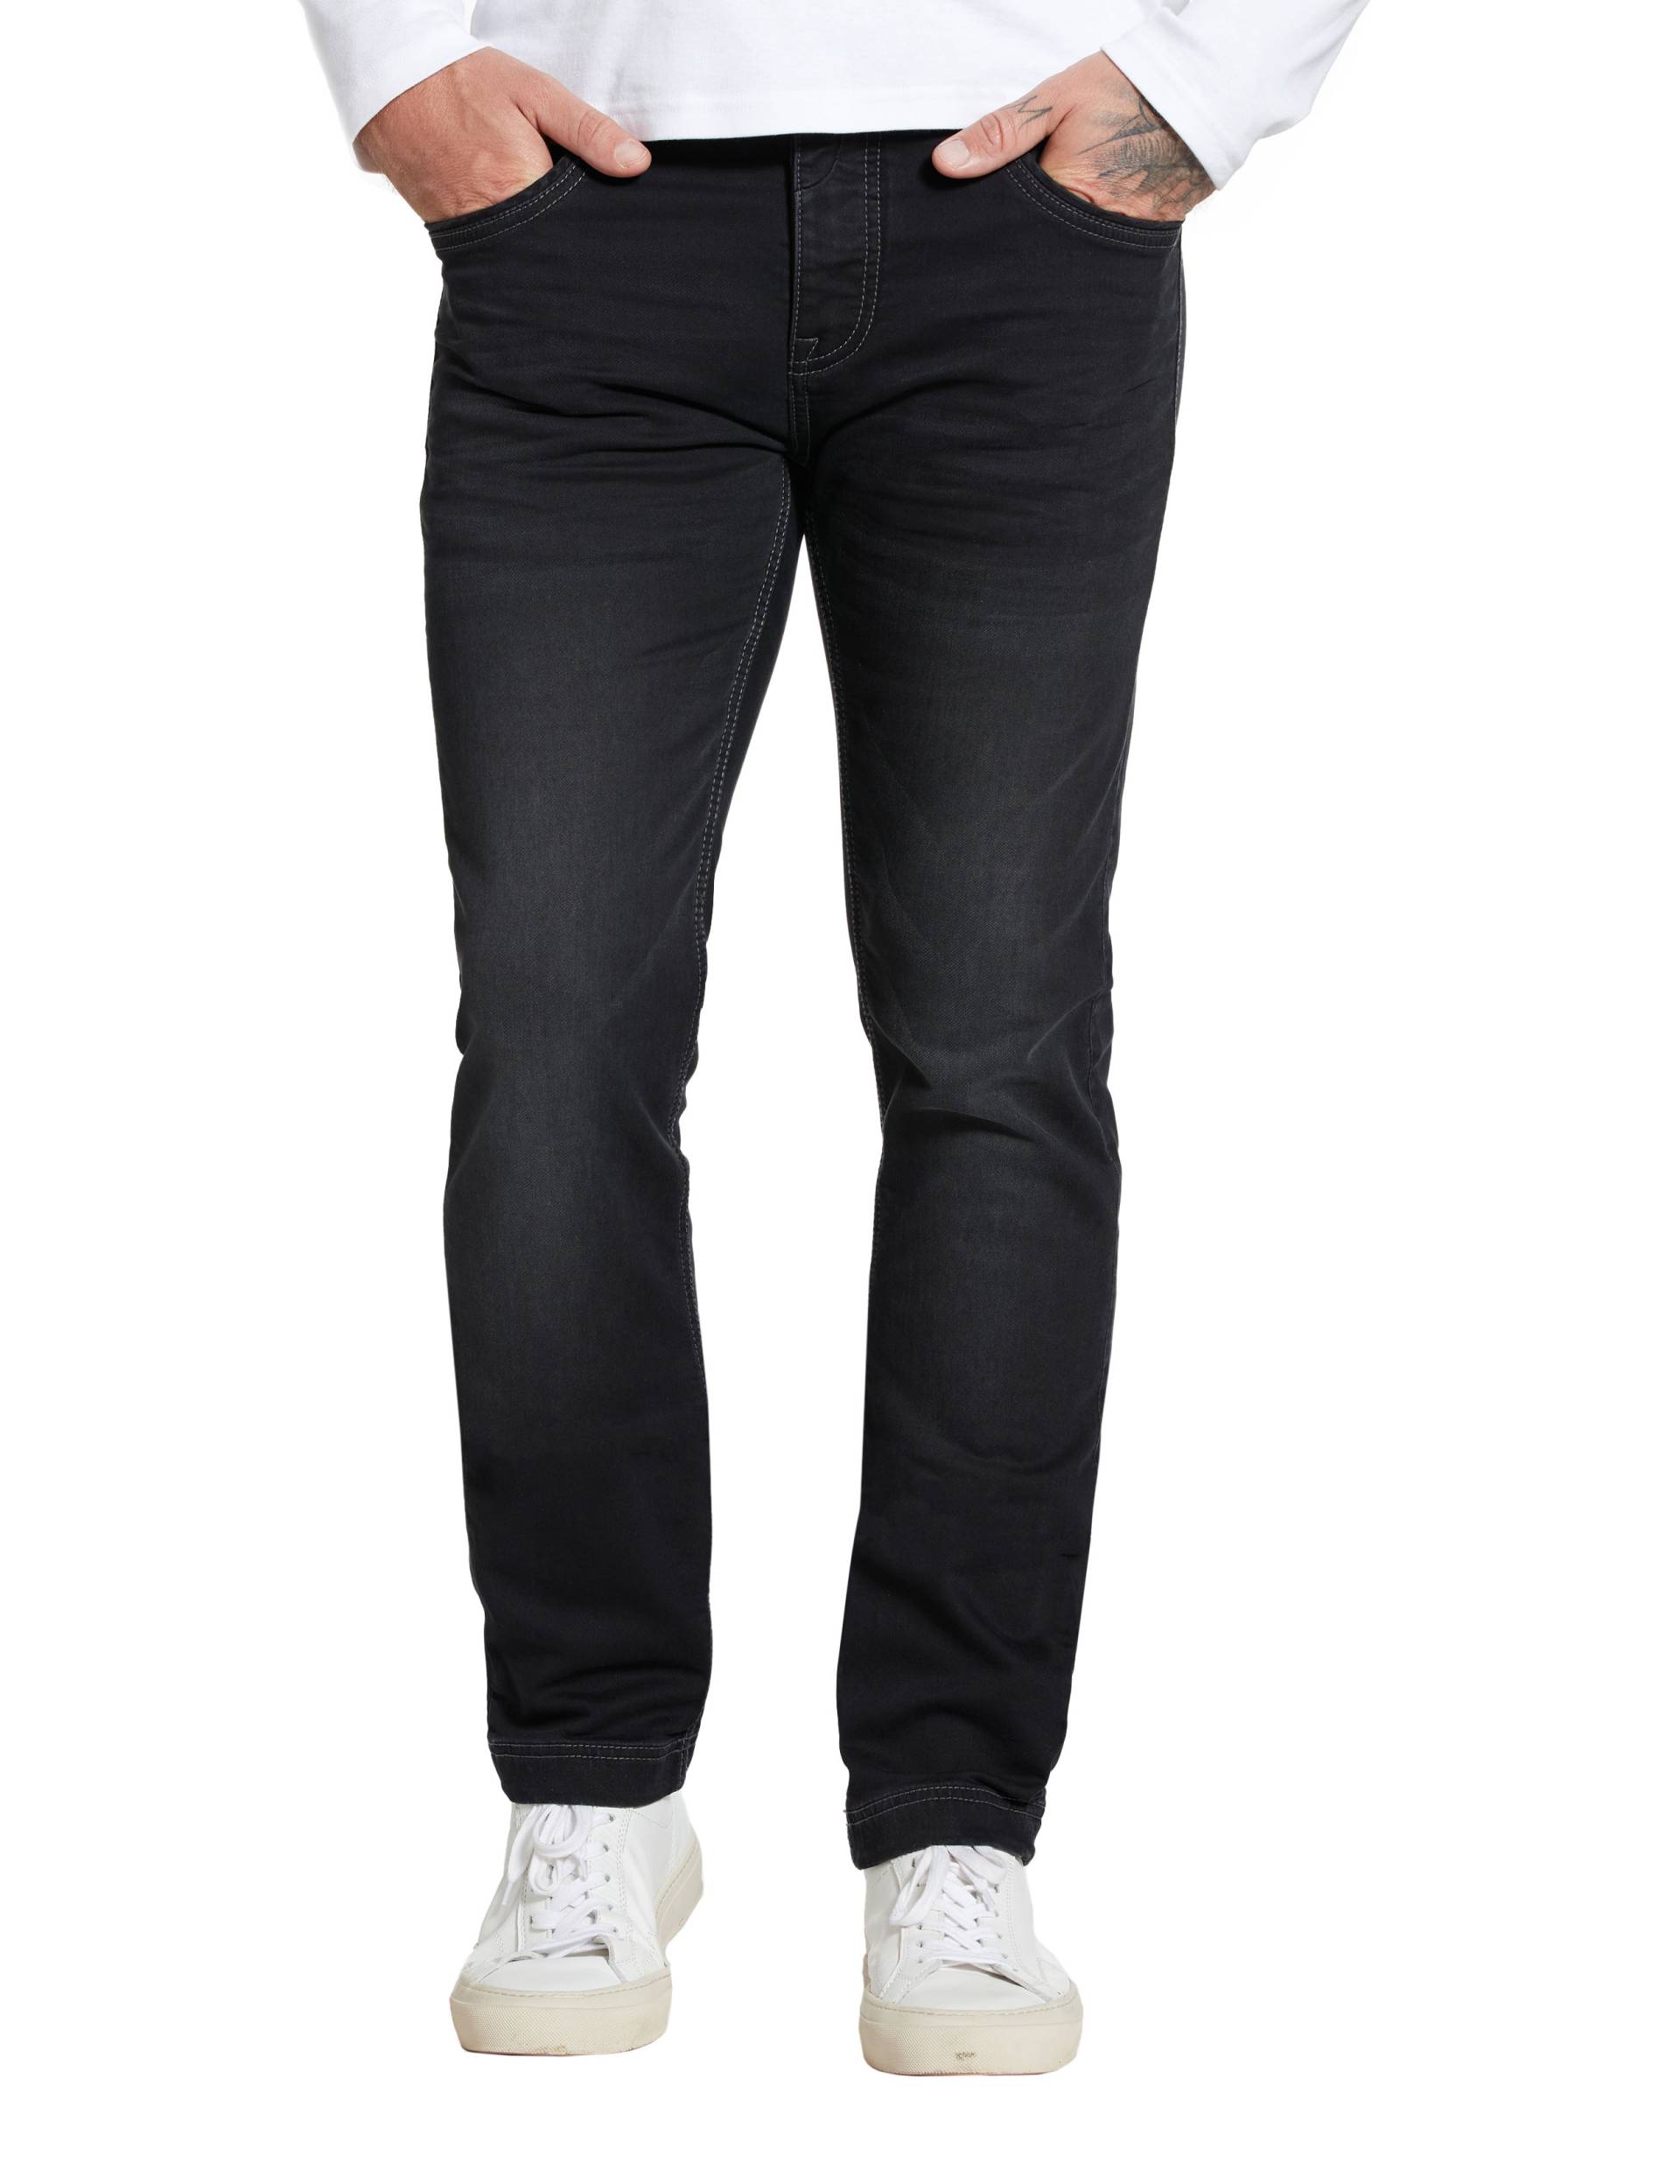 Modell SID: Jeans SUPER Slim von Jeans Fritz